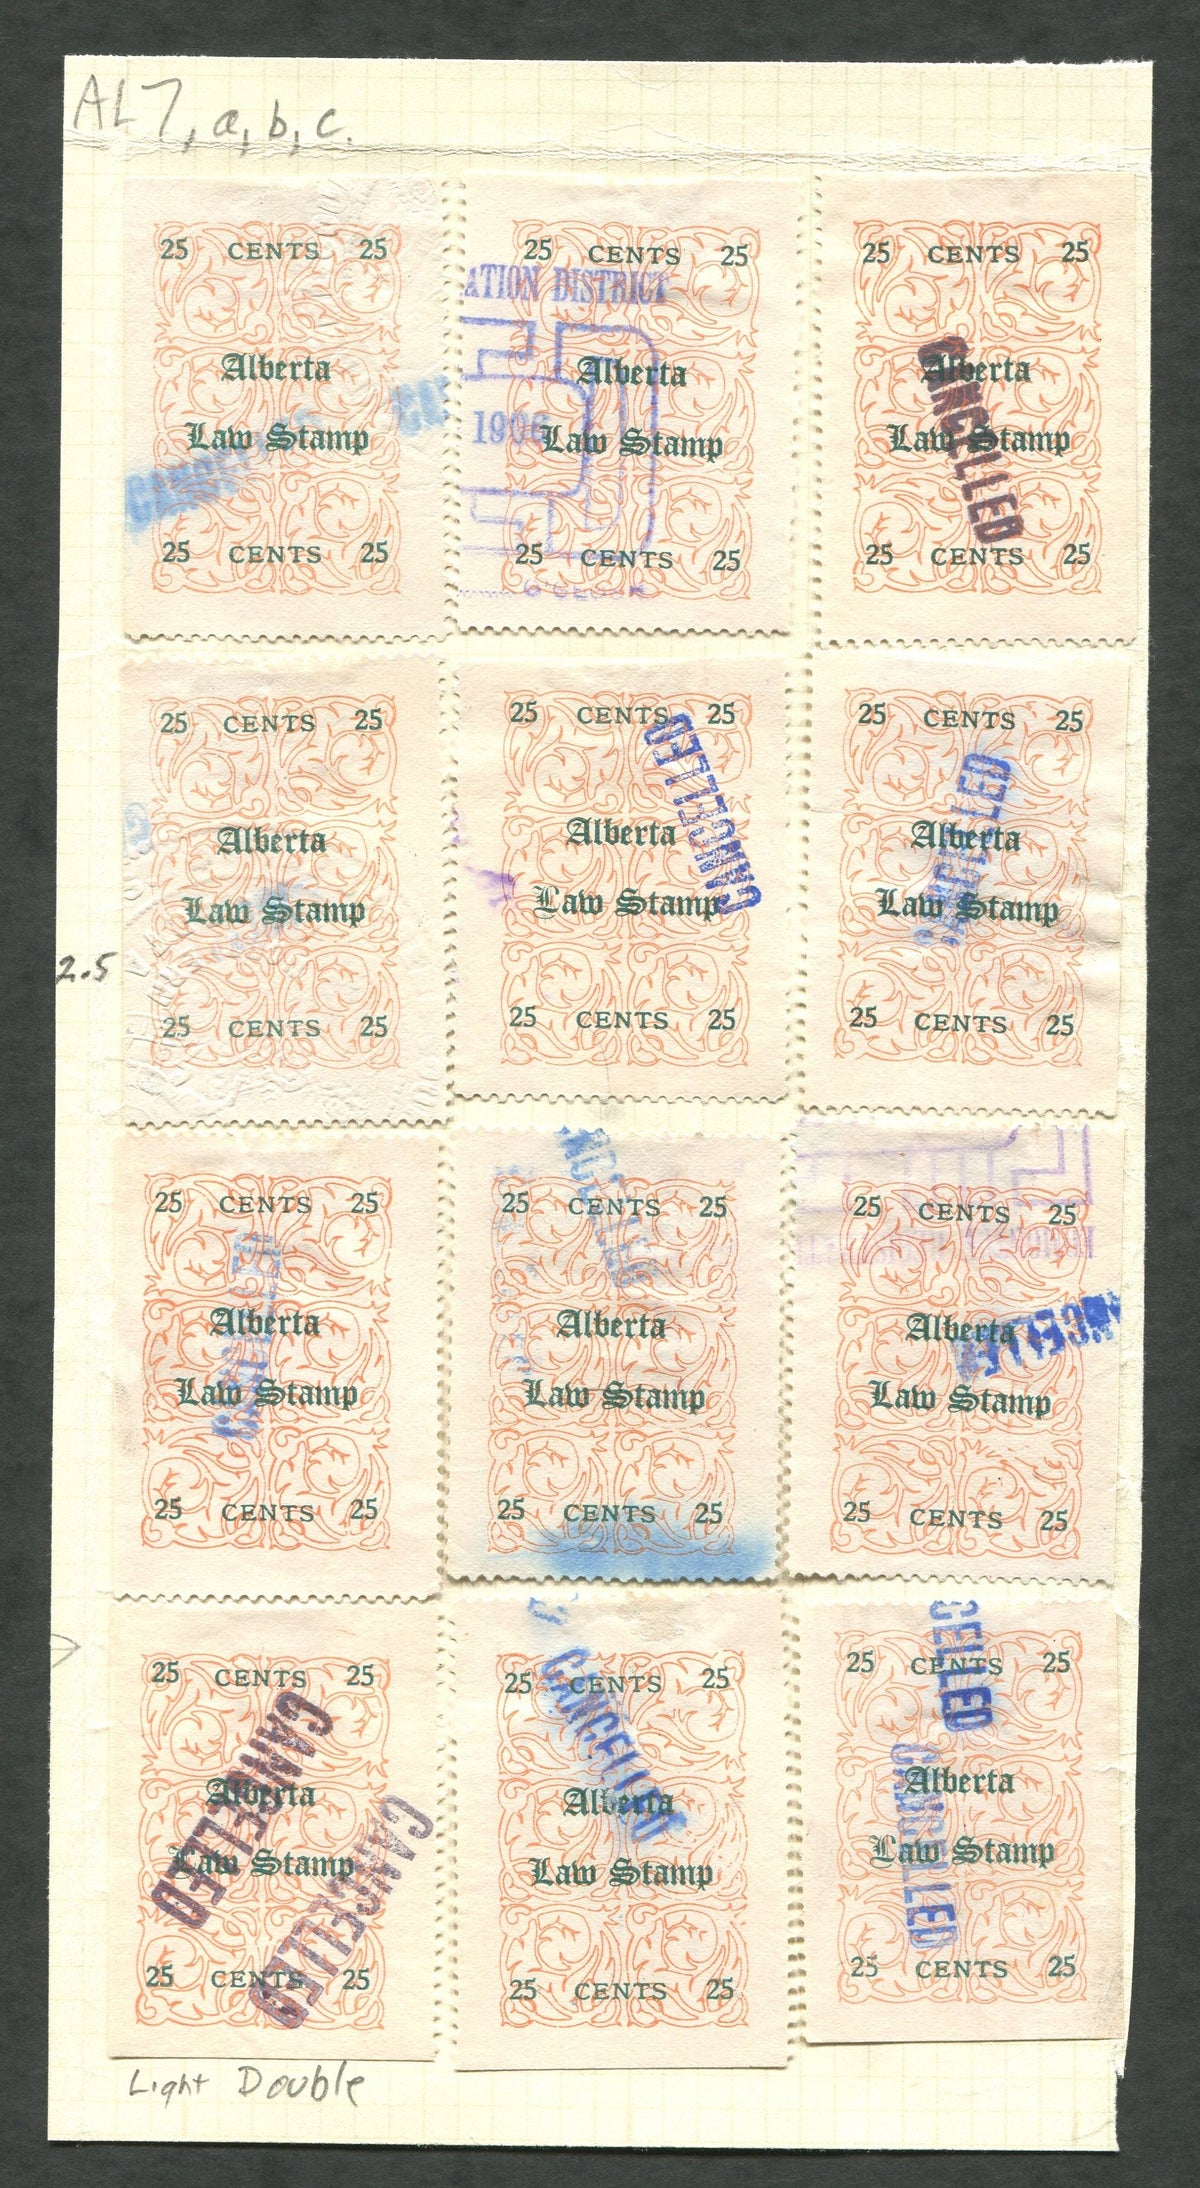 0007AL1709 - AL7,a,b,L - Used Reconstructed Sheet - Deveney Stamps Ltd. Canadian Stamps